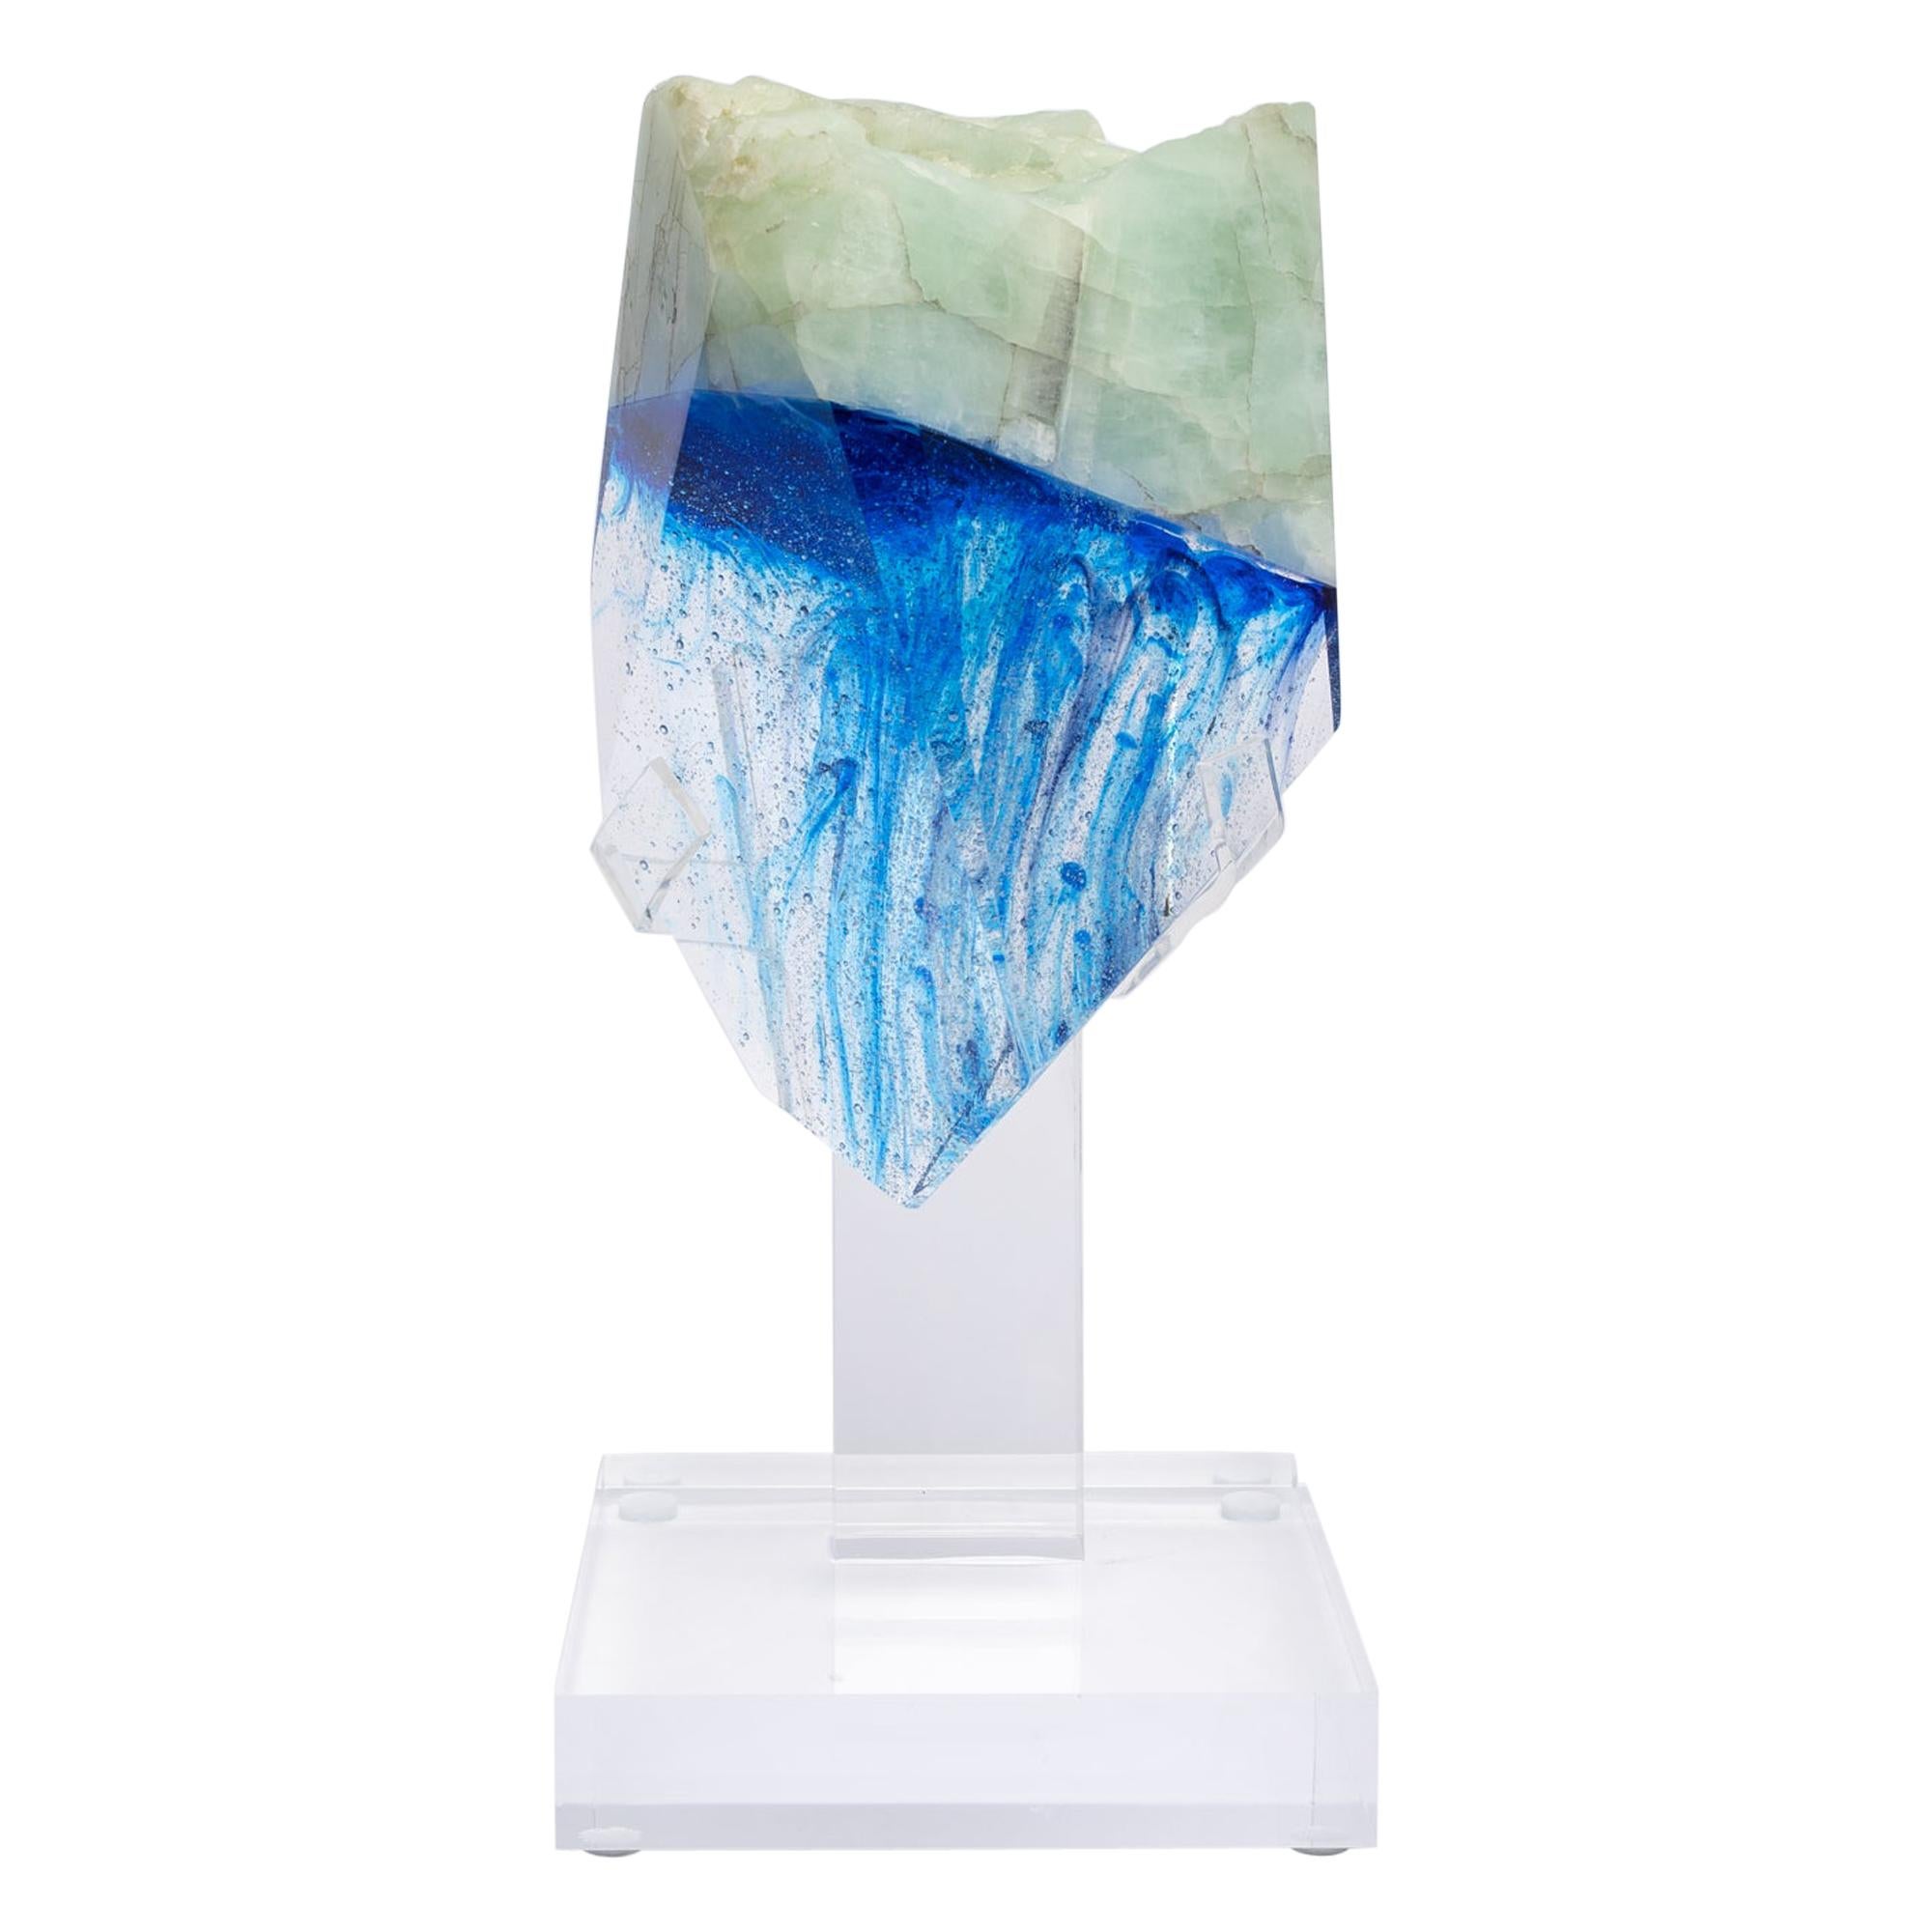 Brazilian Aquamarine and Blue Hues Organic Faceted Glass Fusion Sculpture